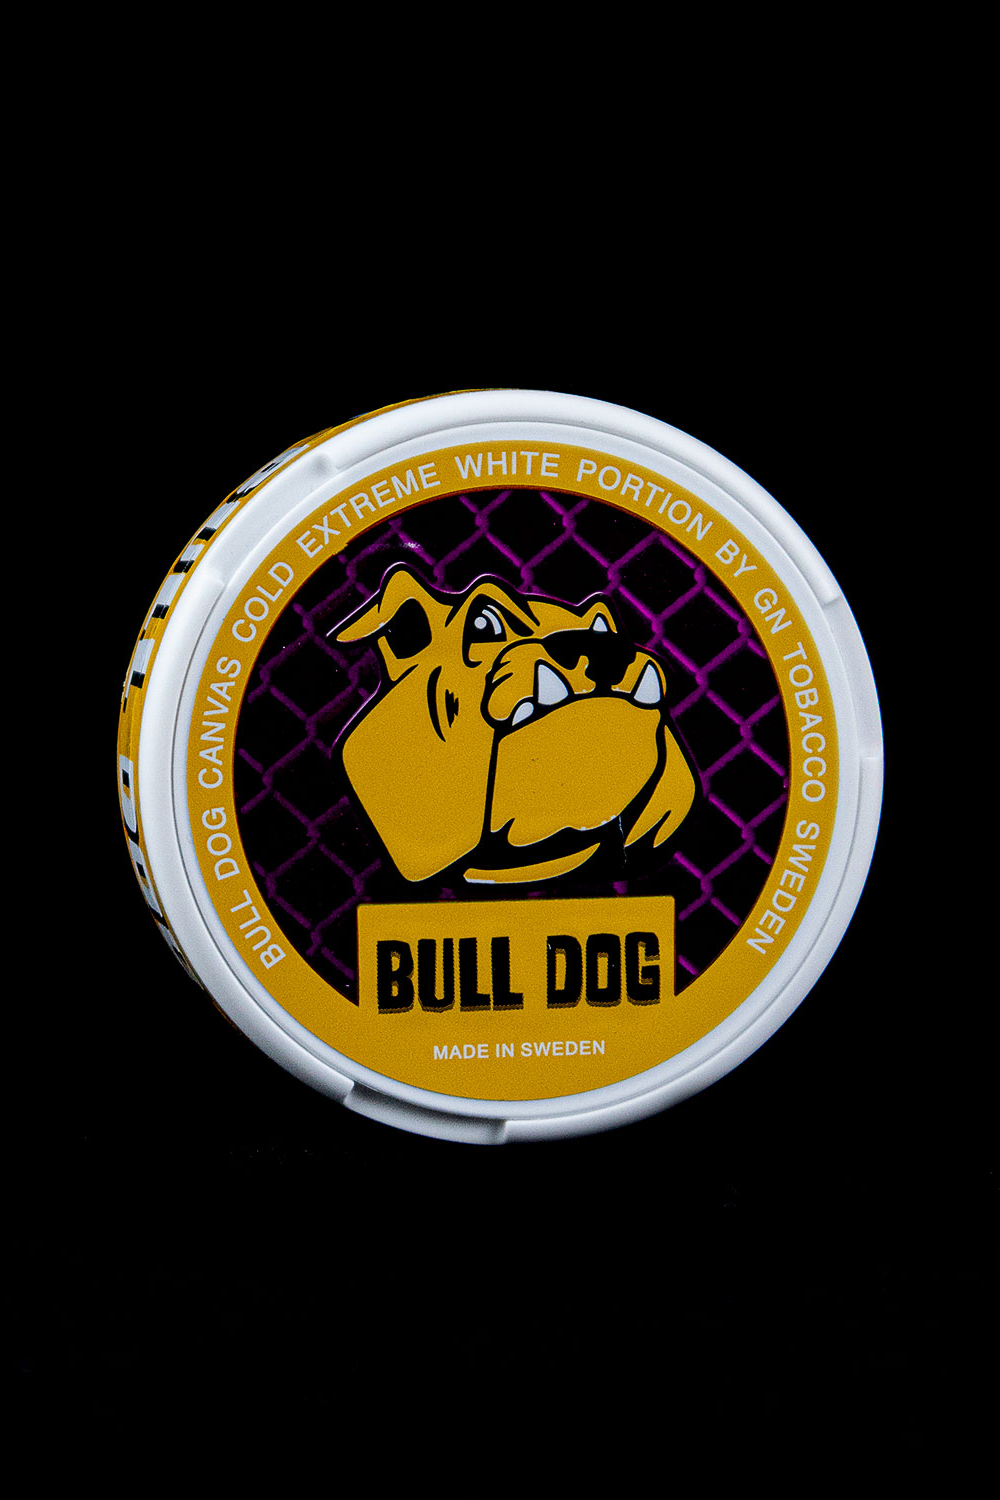 Bulldog snus